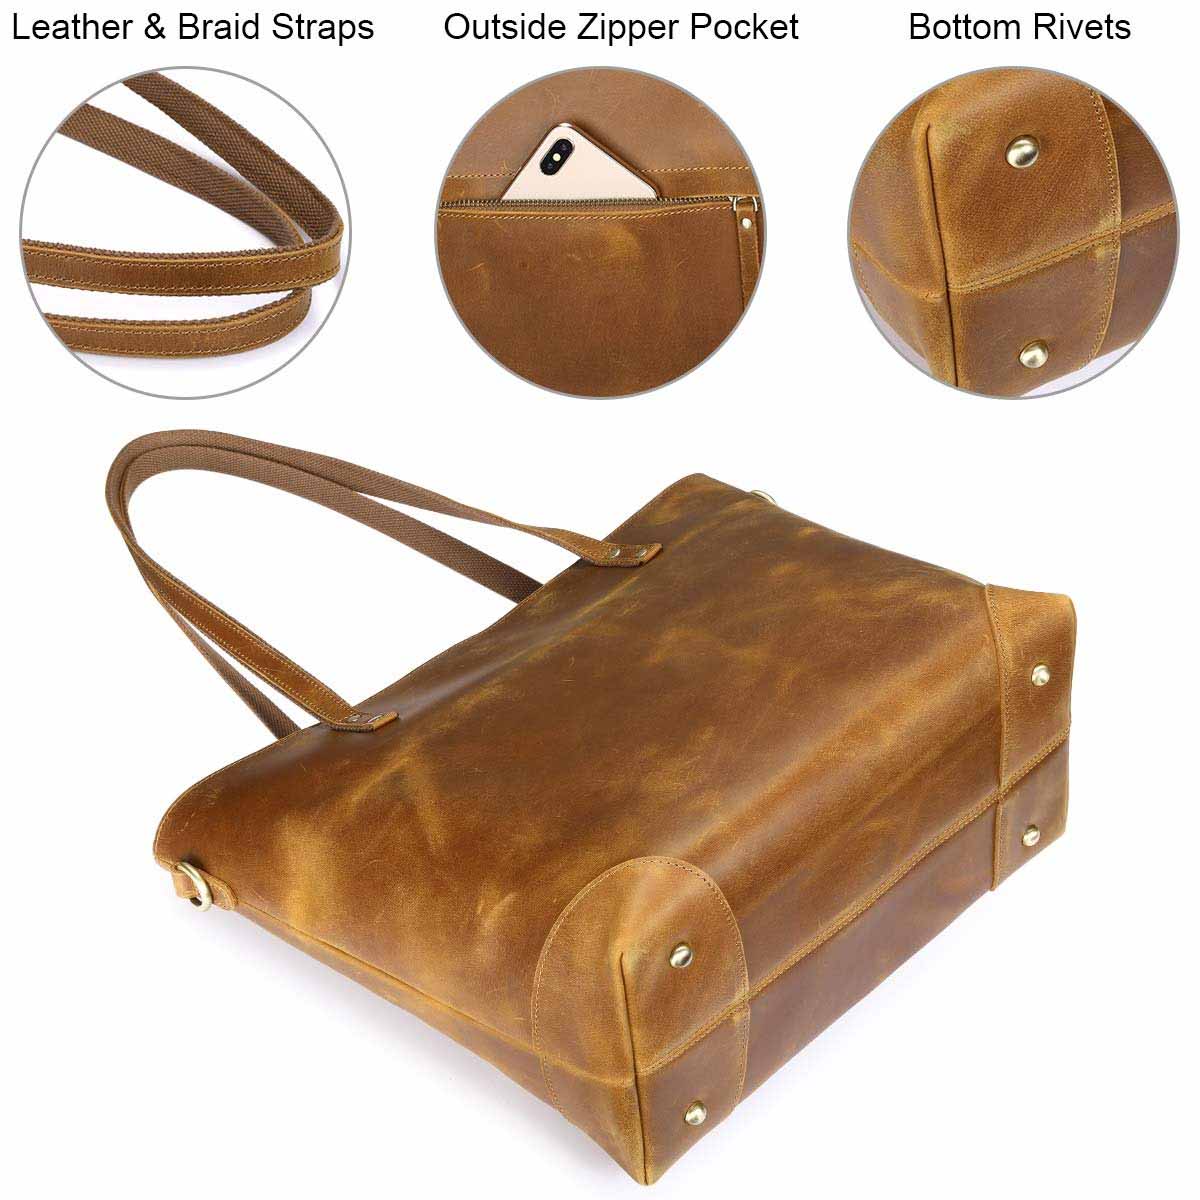 Vintage Leather Tote Bag